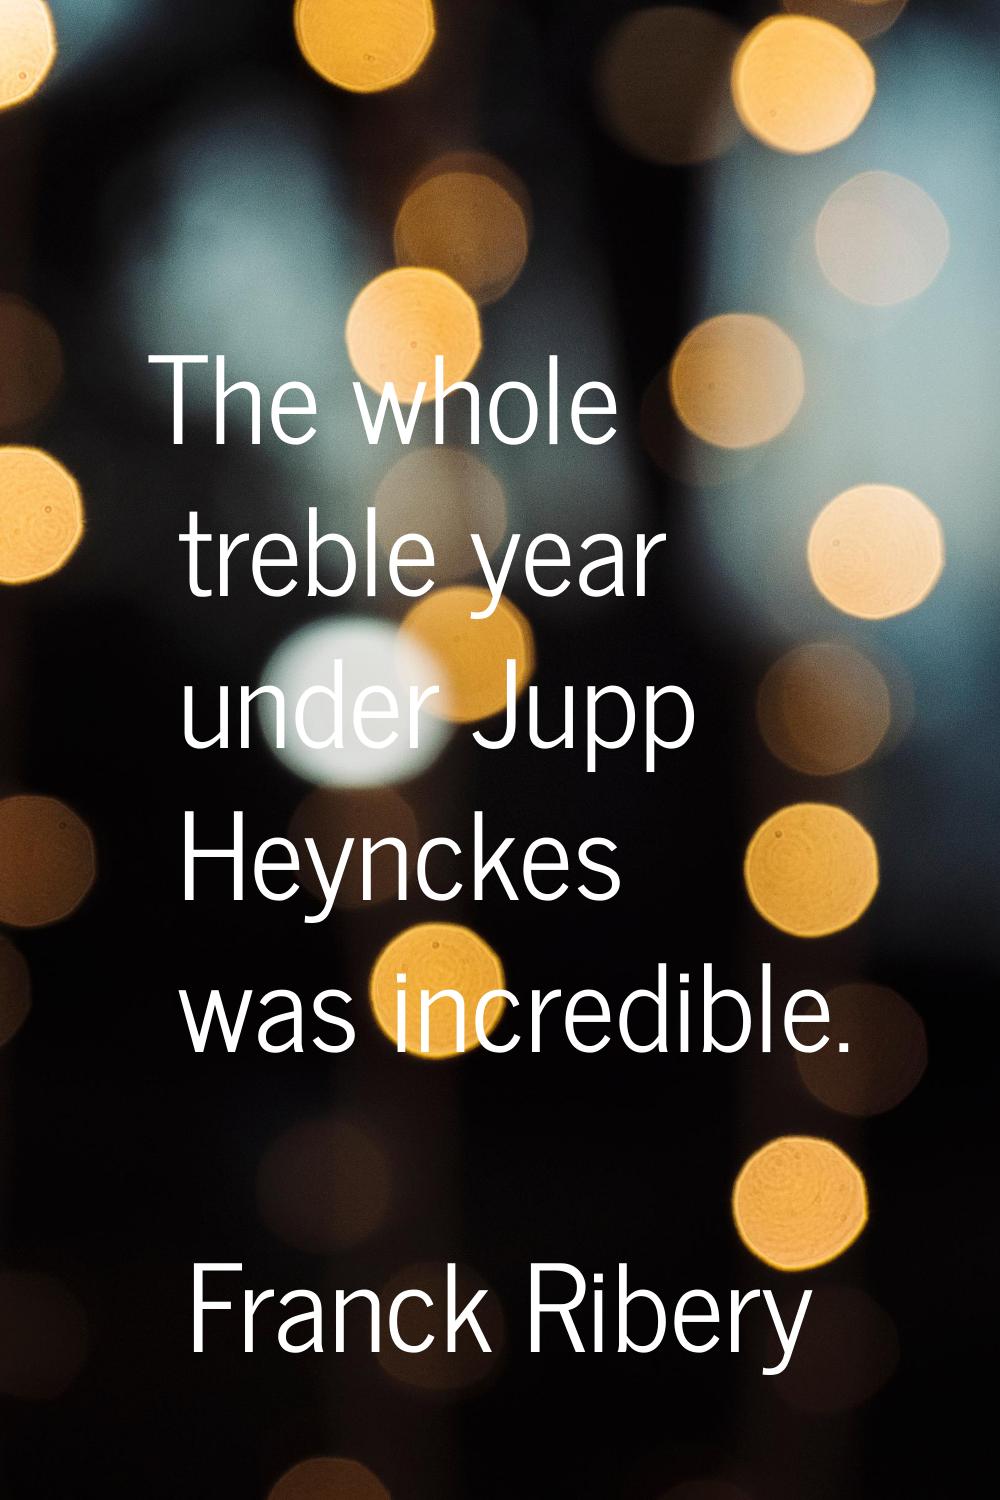 The whole treble year under Jupp Heynckes was incredible.